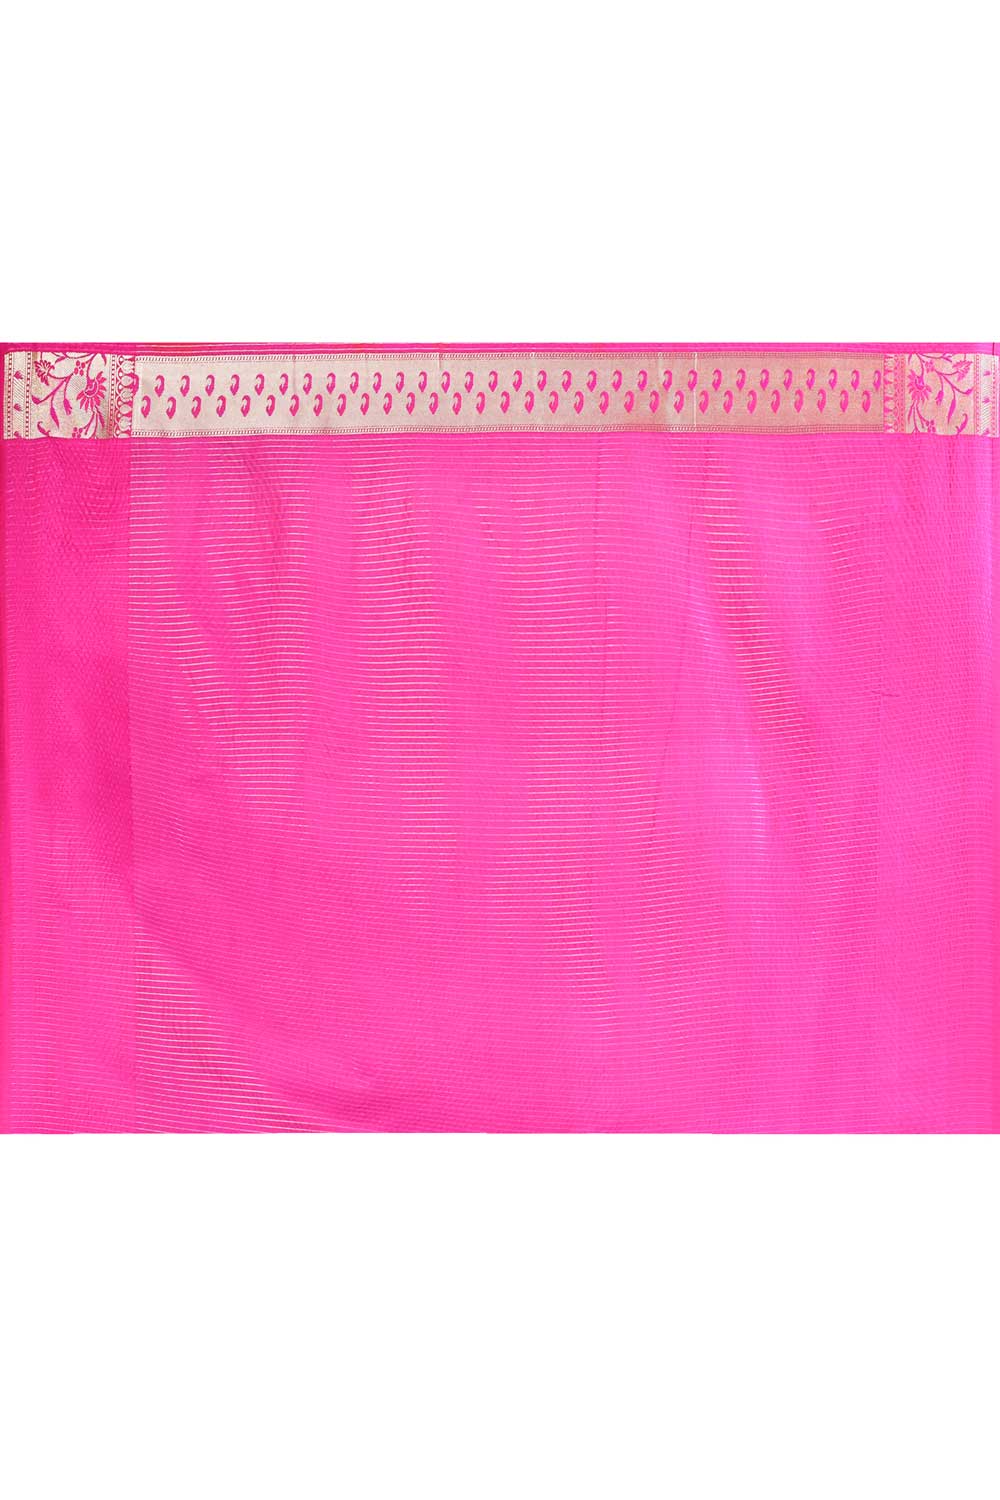 Mustard Green - Pink Banarasi Handloom Saree with Paithani Border